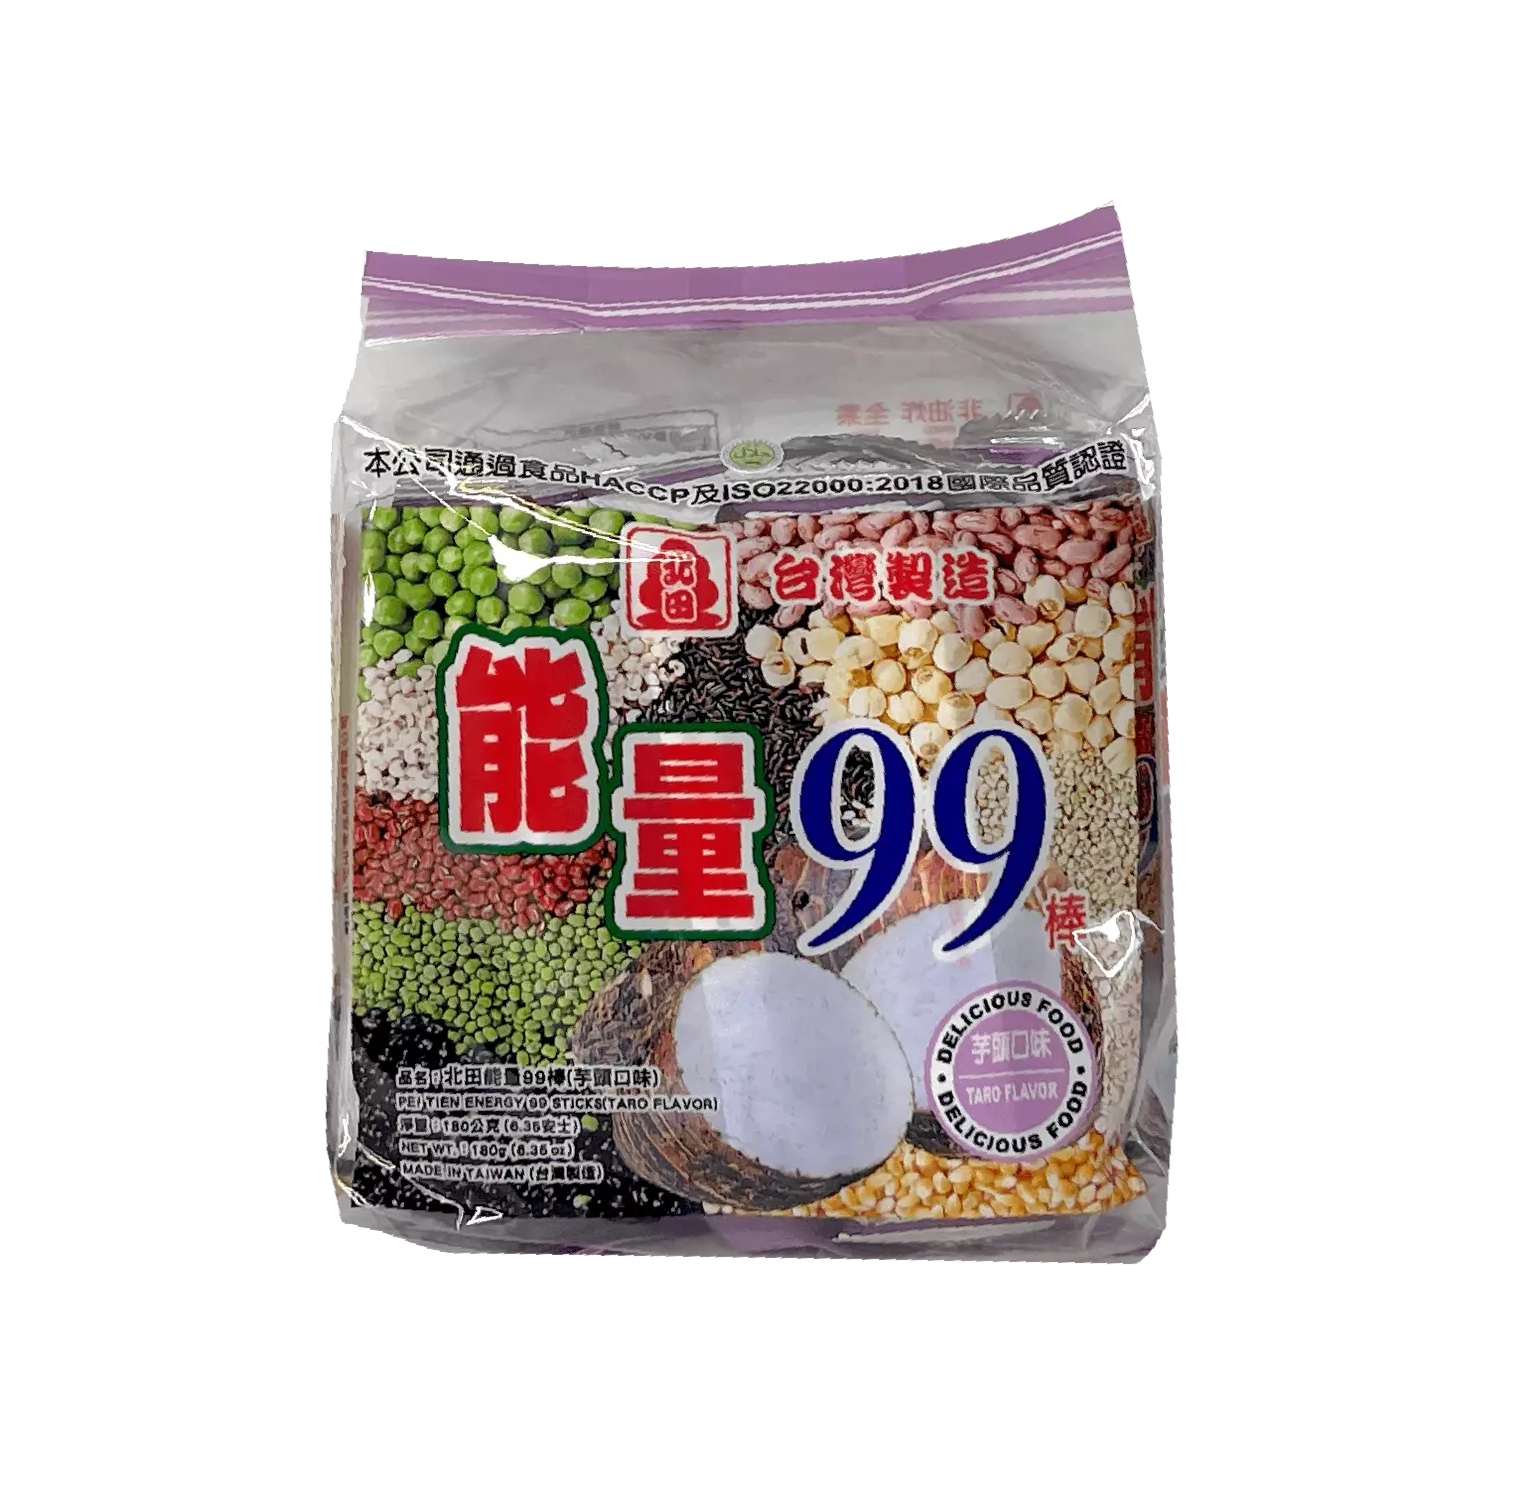 Energi 99 Puffed Rice Stick With Taro Flavour 180g Peitien Taiwan China